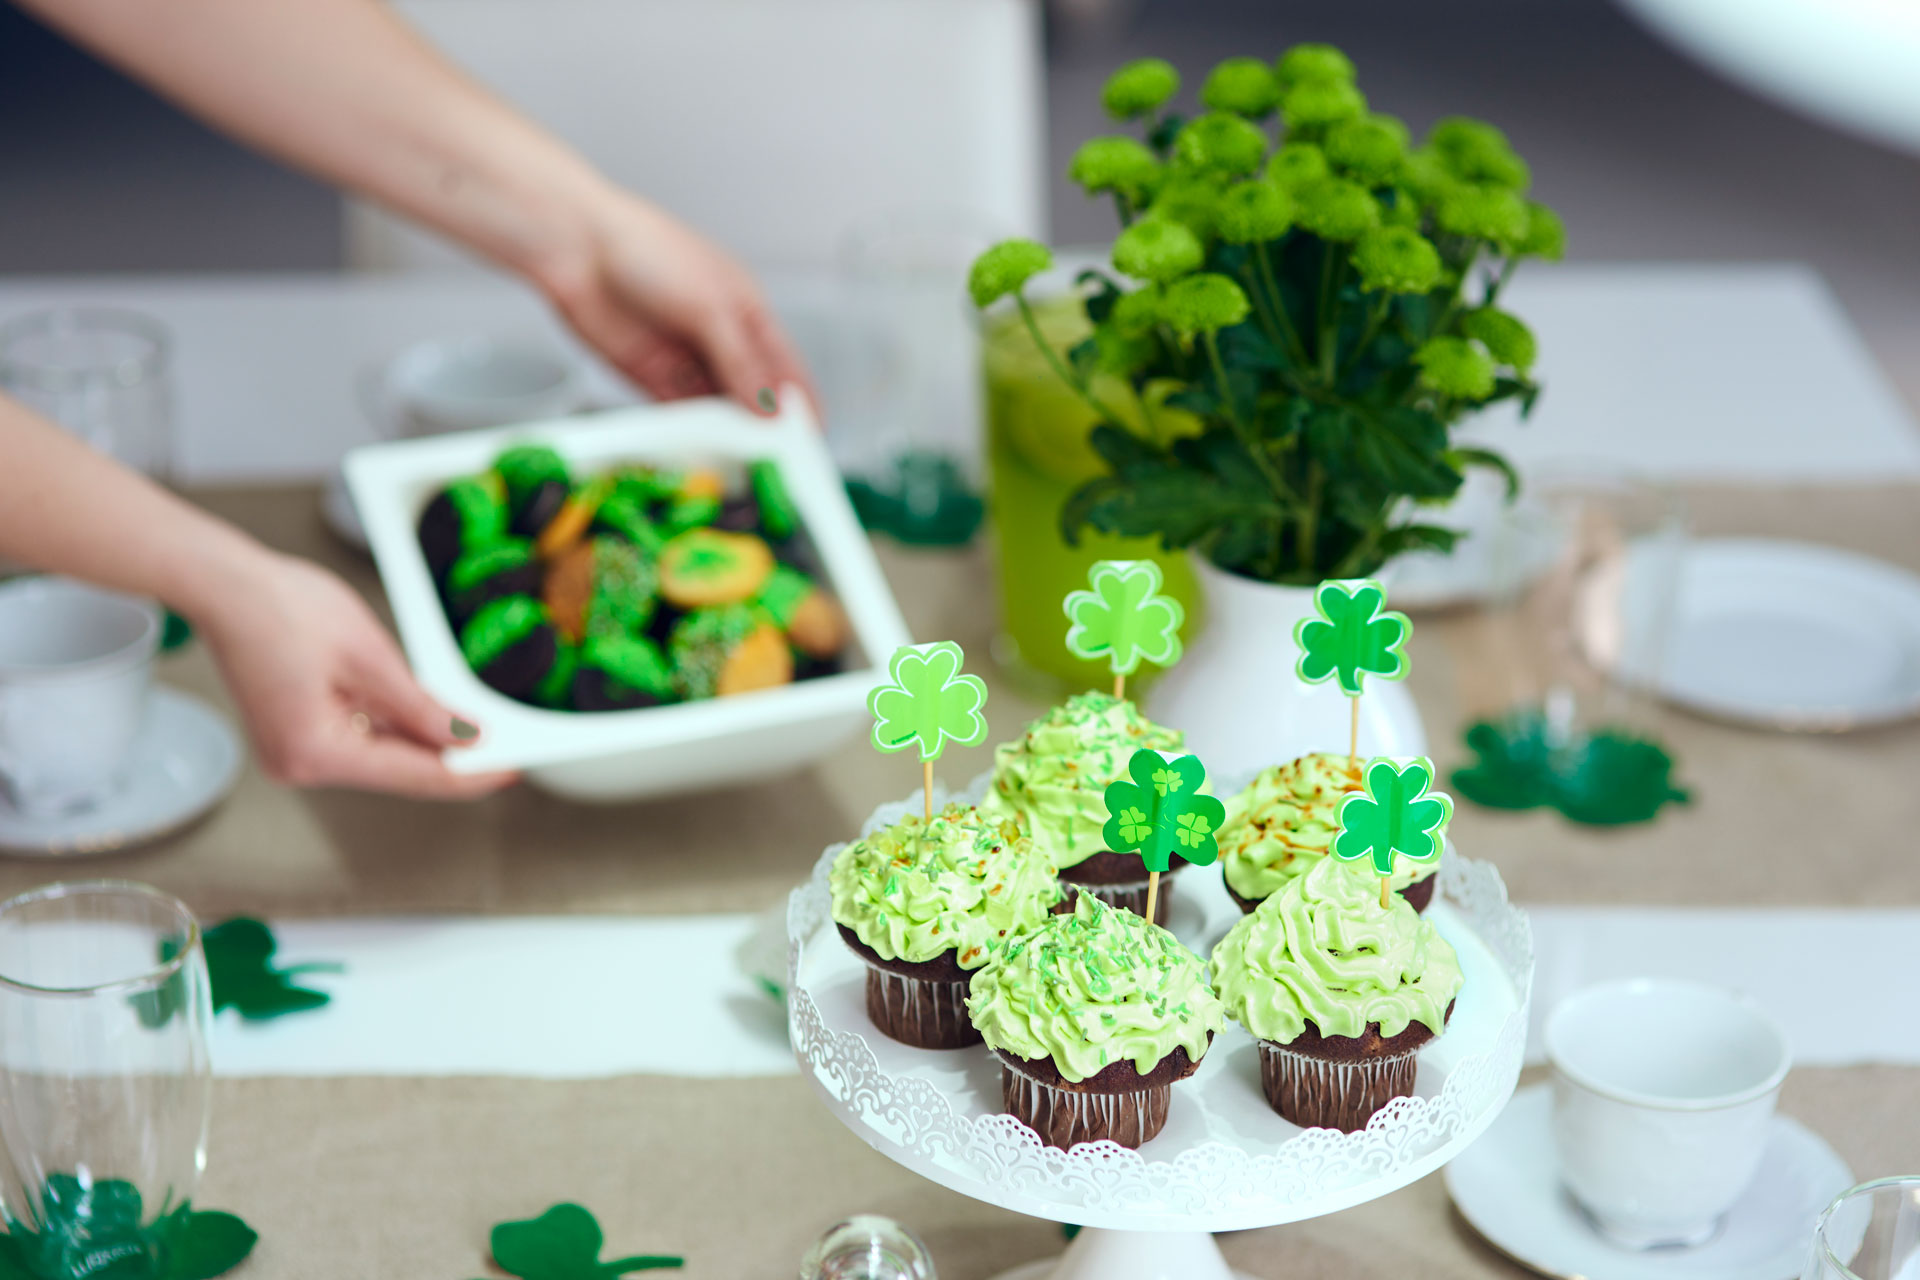 St Patrick's Day cakes